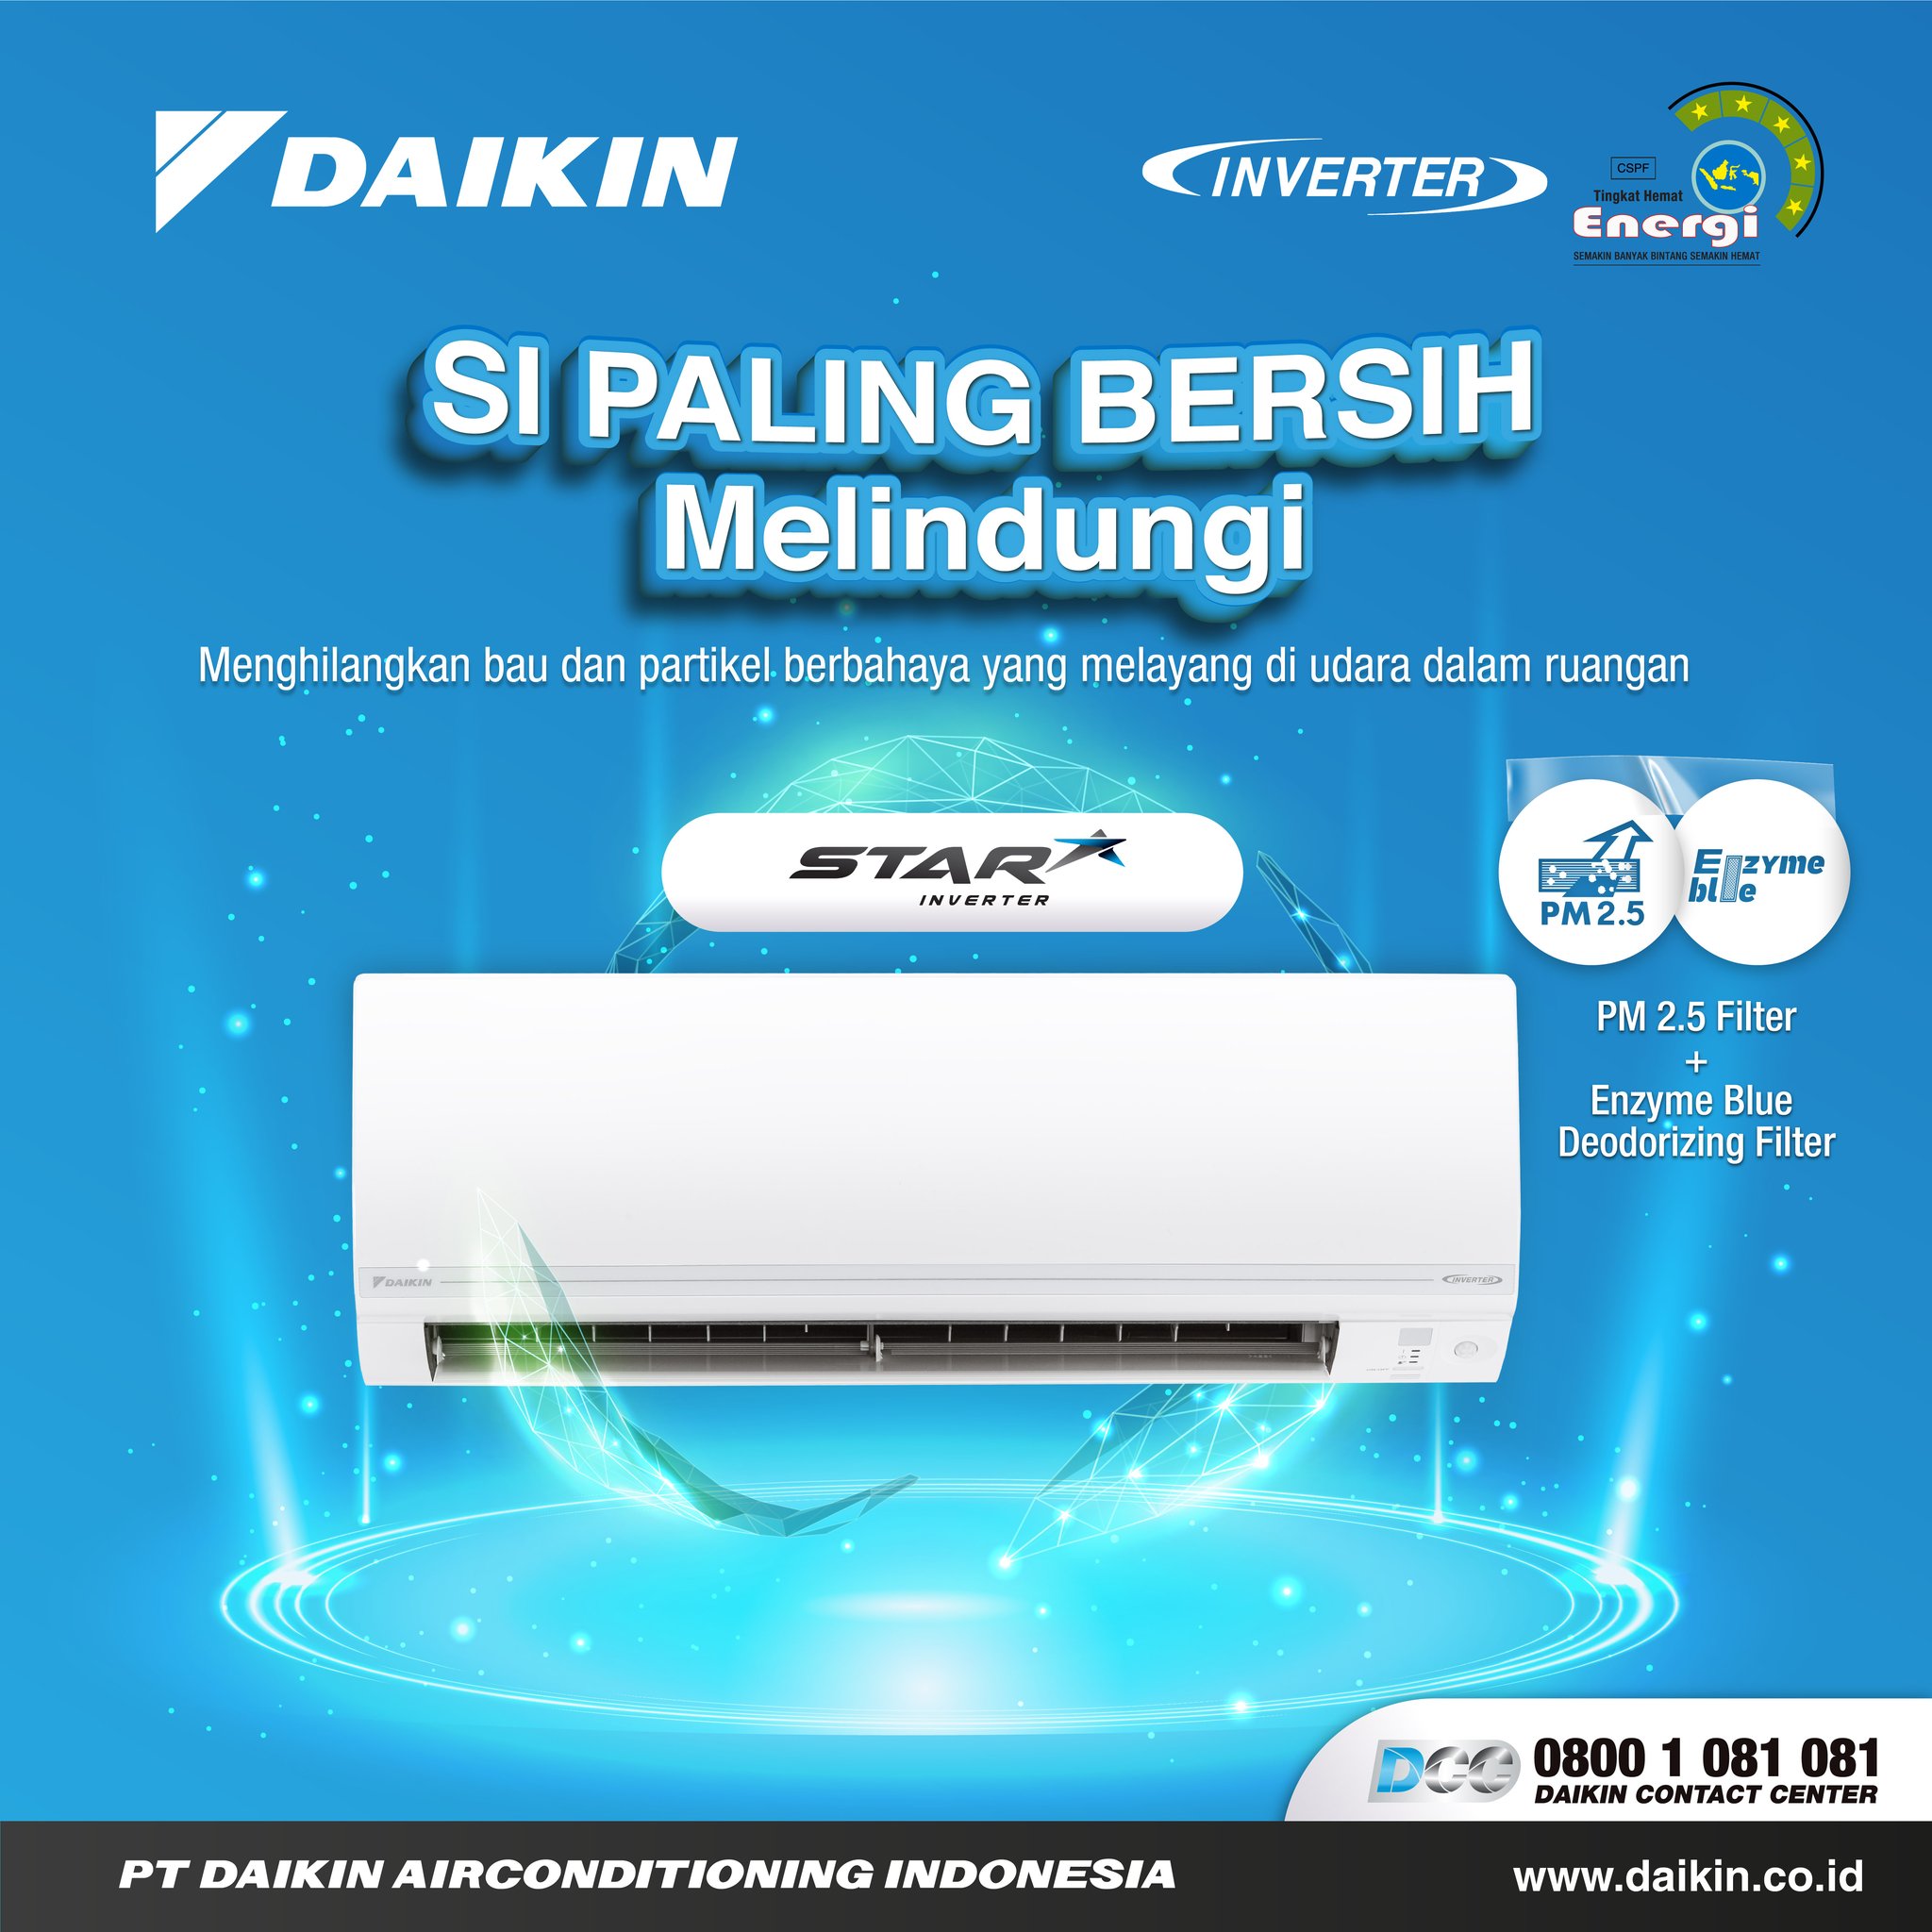 Daikin AC Wall Mounted Split Inverter Star Thailand 1 PK - FTKC25TVM4 + RKC25TVM4 